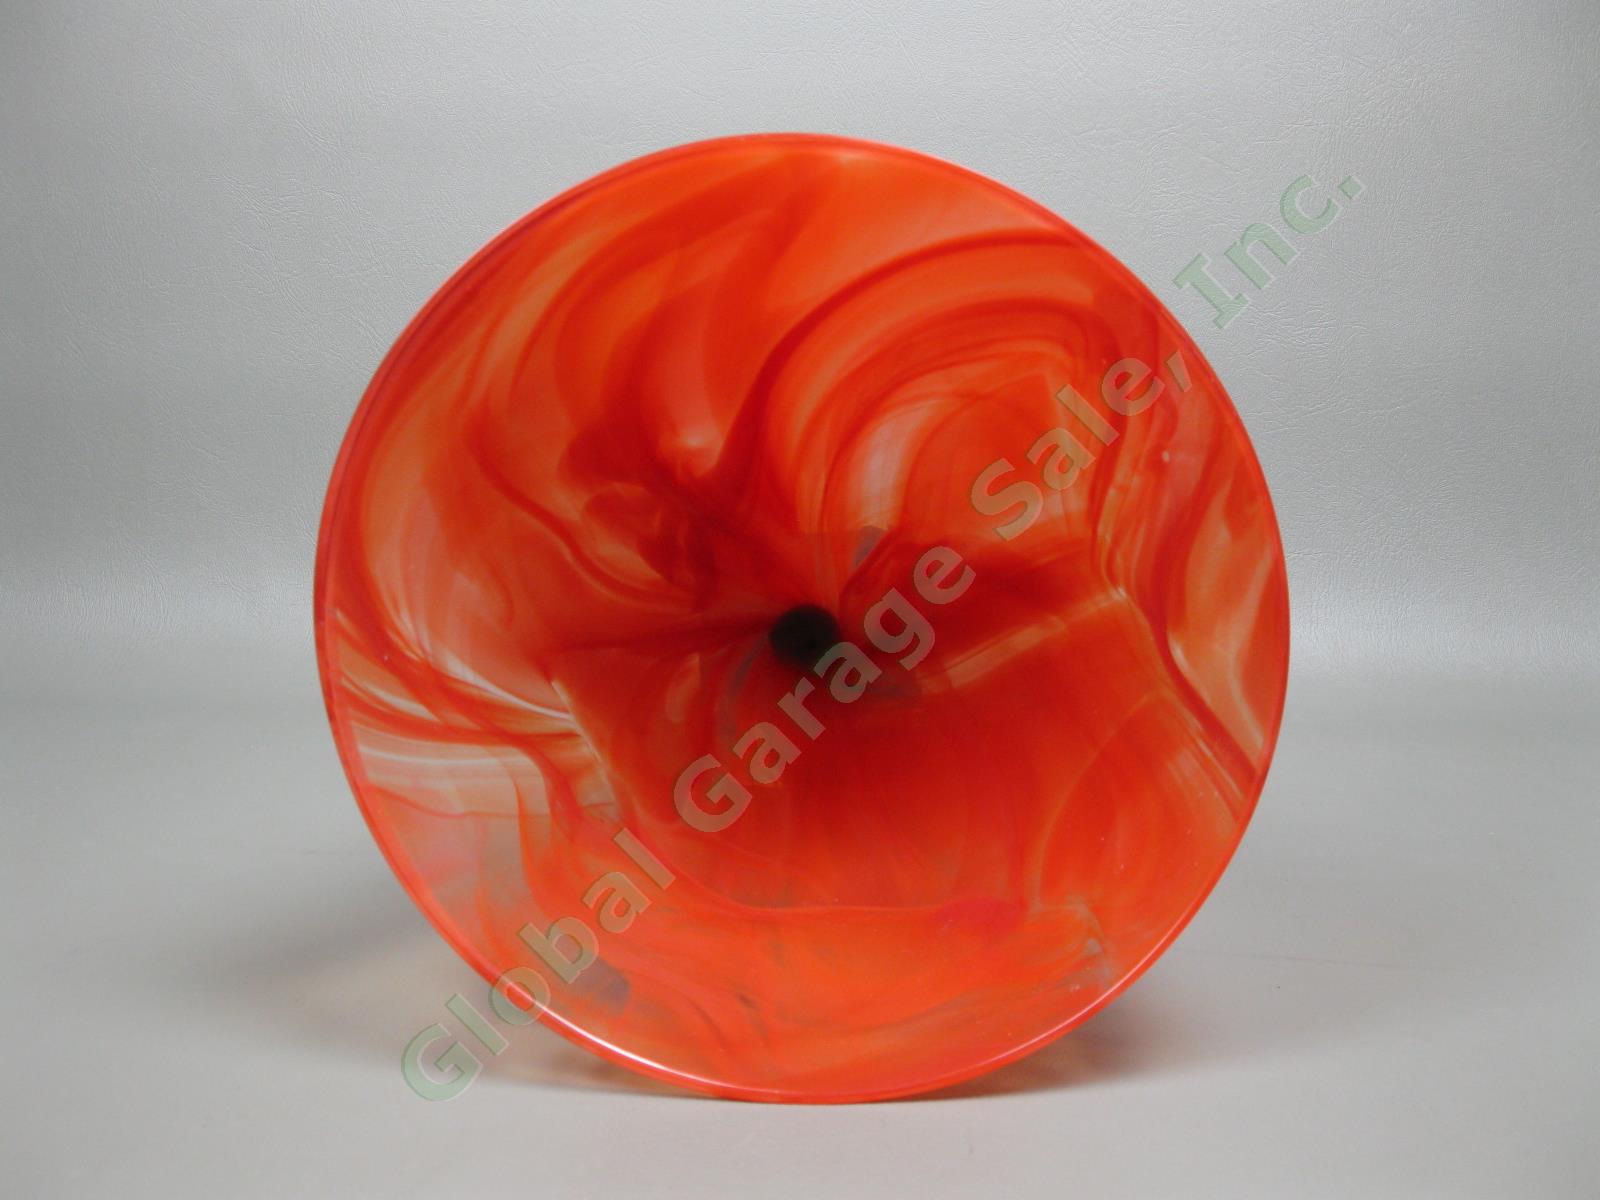 Rare AV Mazzega Murano Art Glass Signed 11" Conical Red Cone Vase Italian Design 6